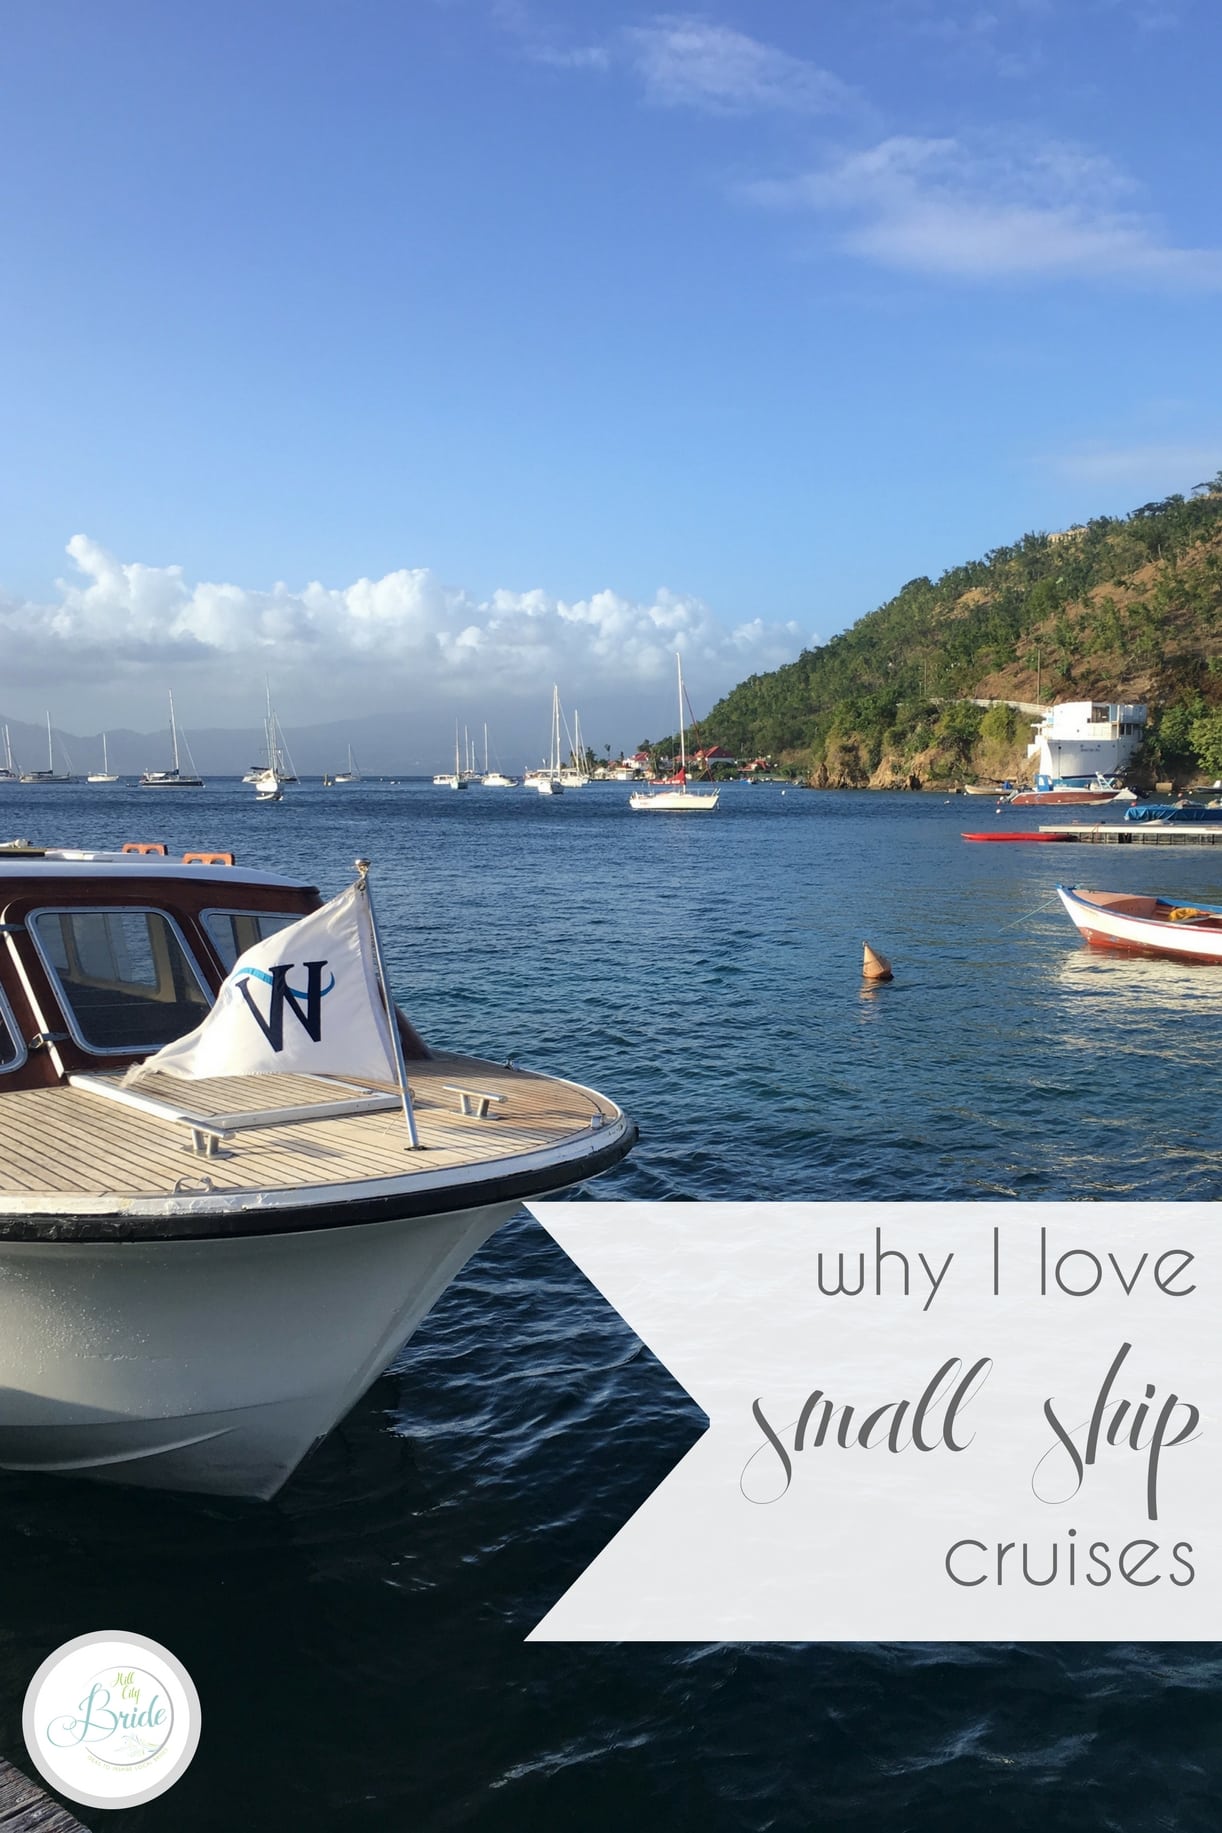 Small Ship Cruises featuring Windstar | Hill City Bride Virginia Wedding Blog Destination Travel Honeymoon Journey